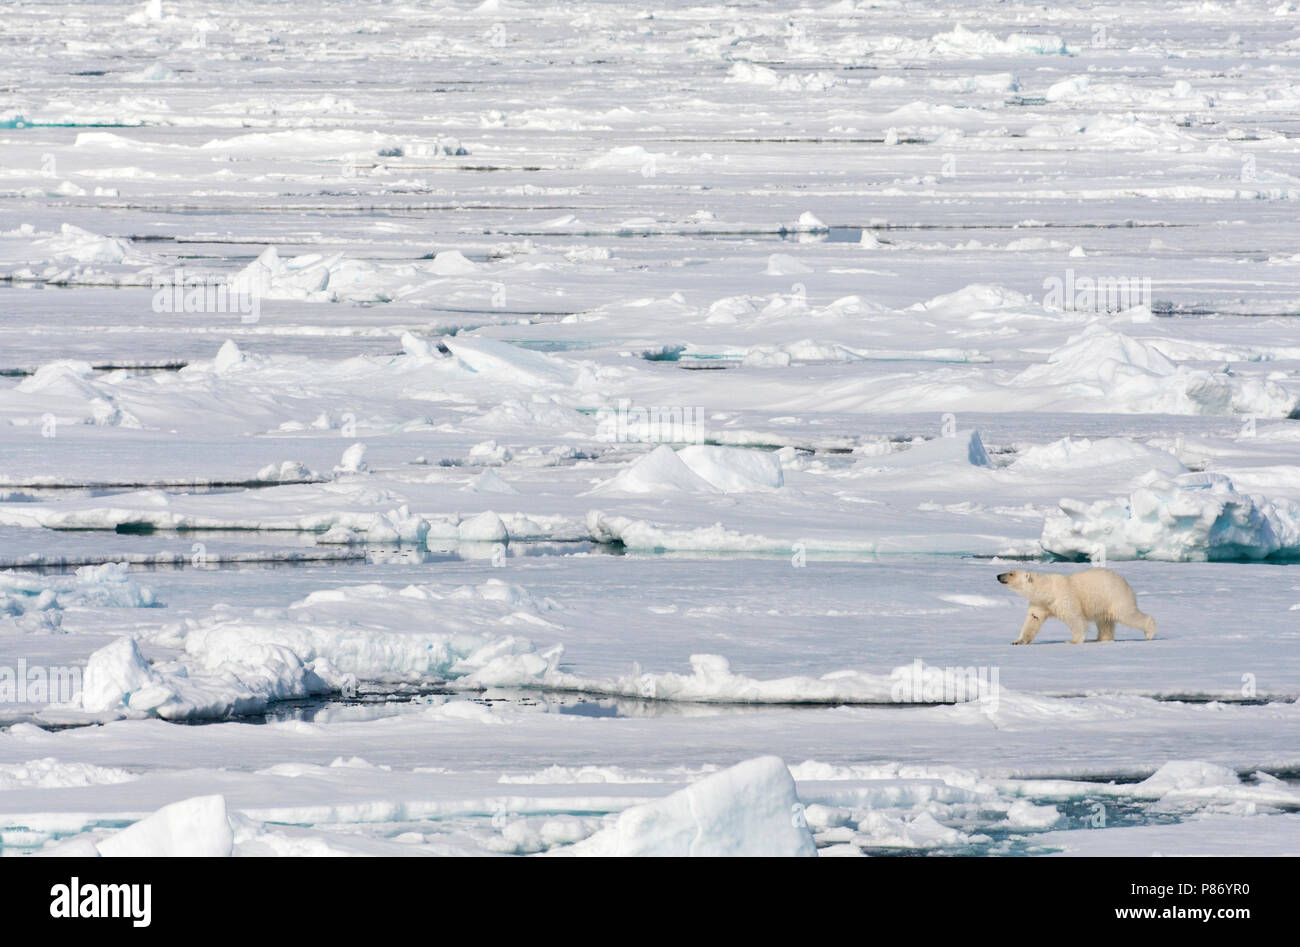 IJsbeer lopend op het pakijs; Orso Polare camminando sulla banchisa Foto Stock